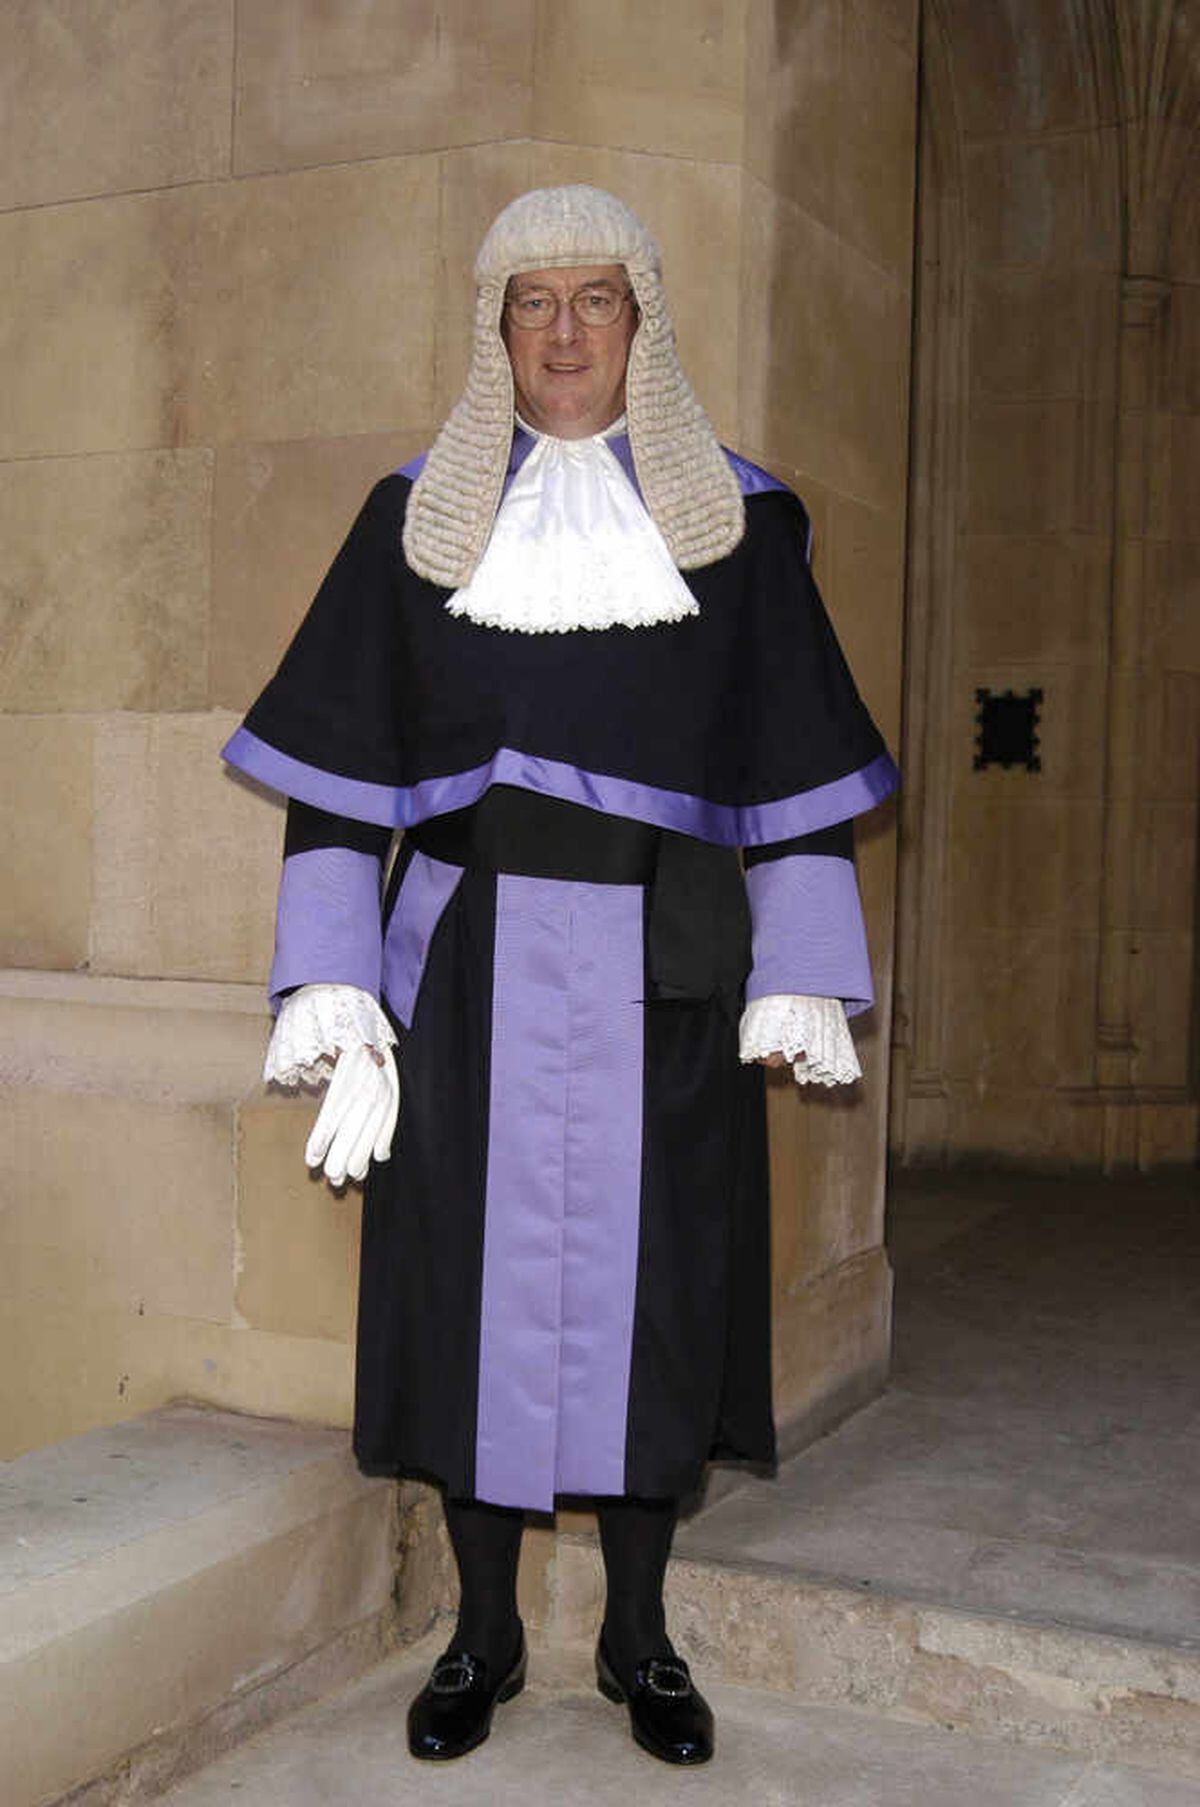 Judge Michael Dudley